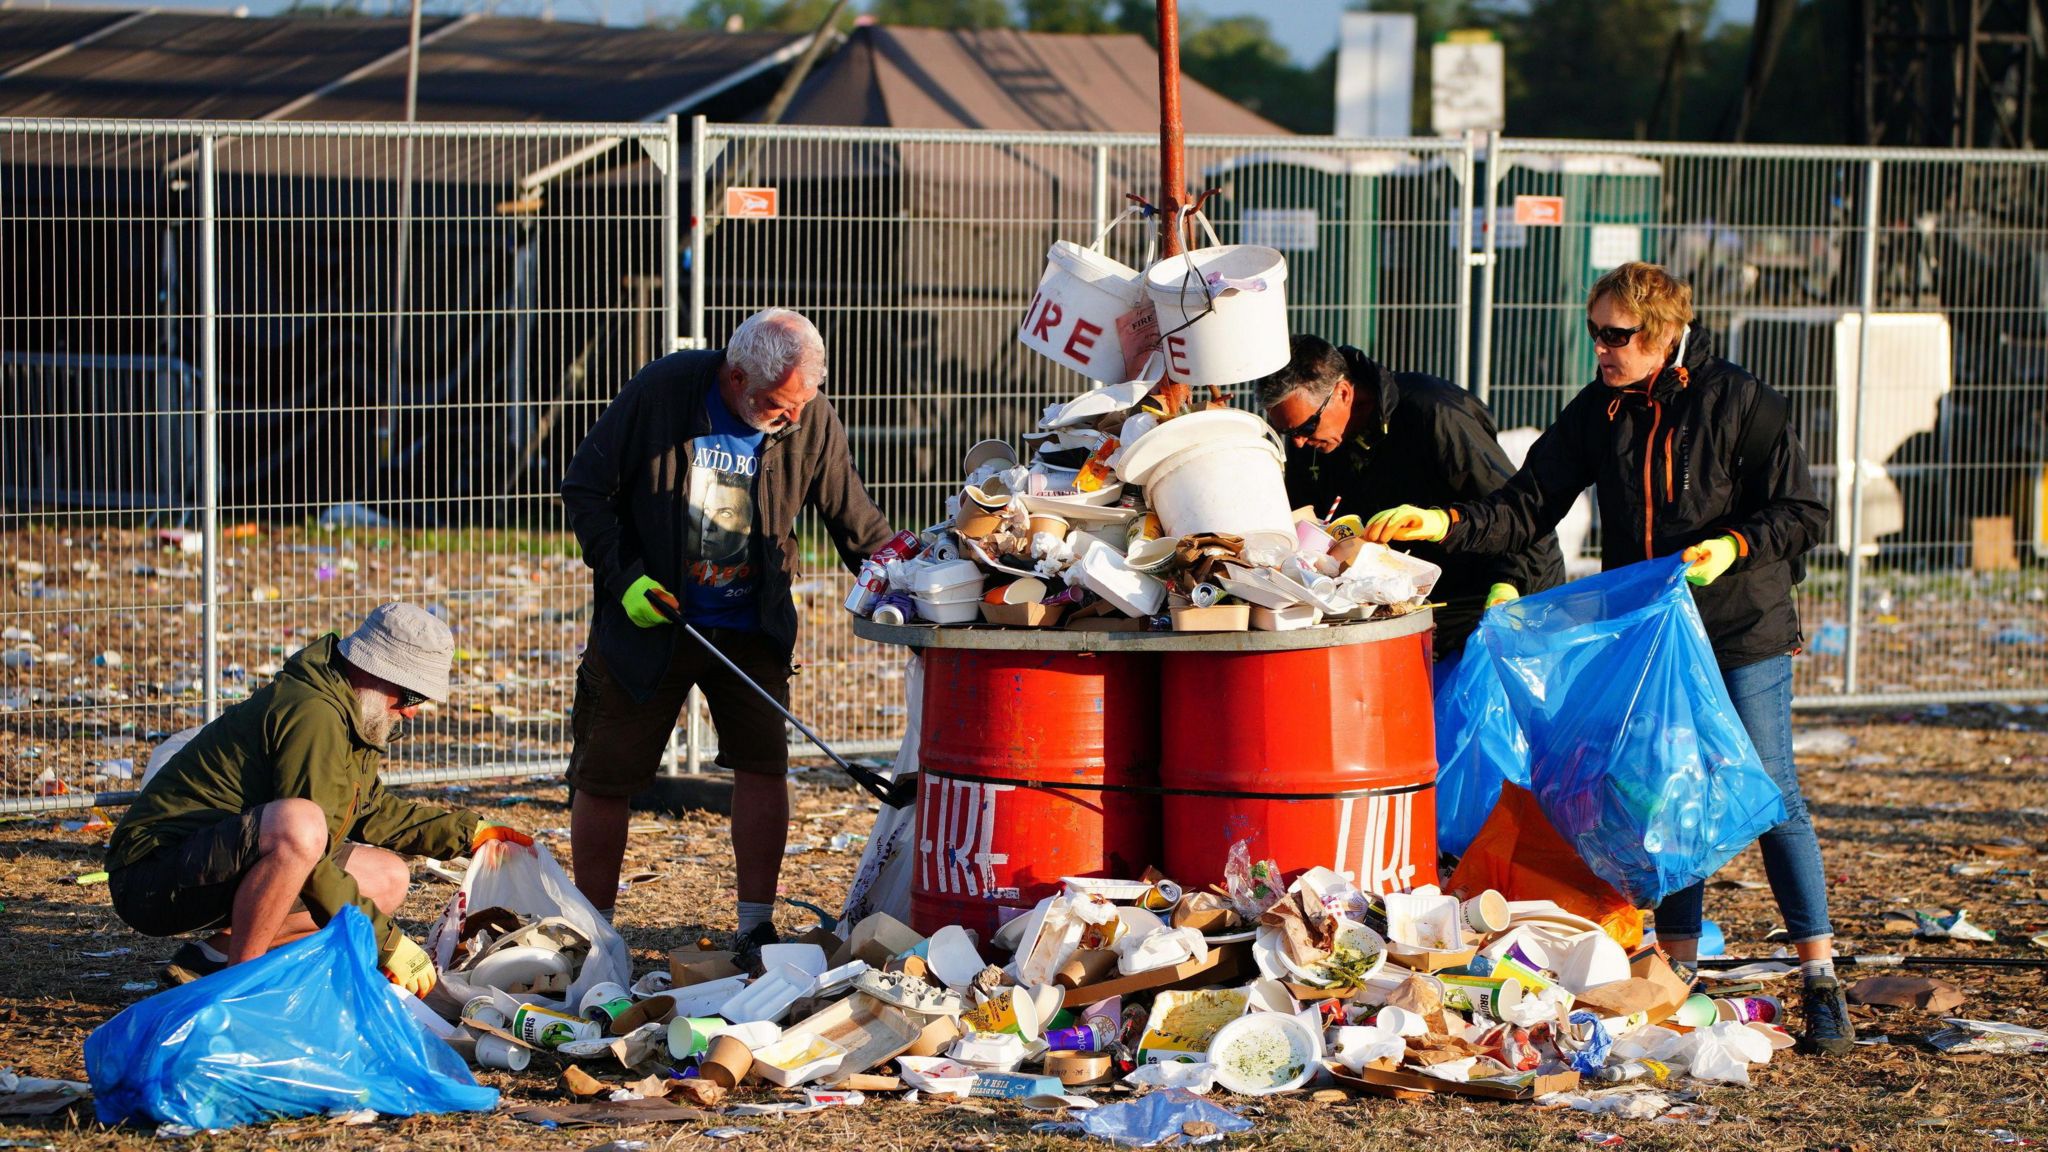 A team of volunteers pick up rubbish around red bins on the Glastonbury site